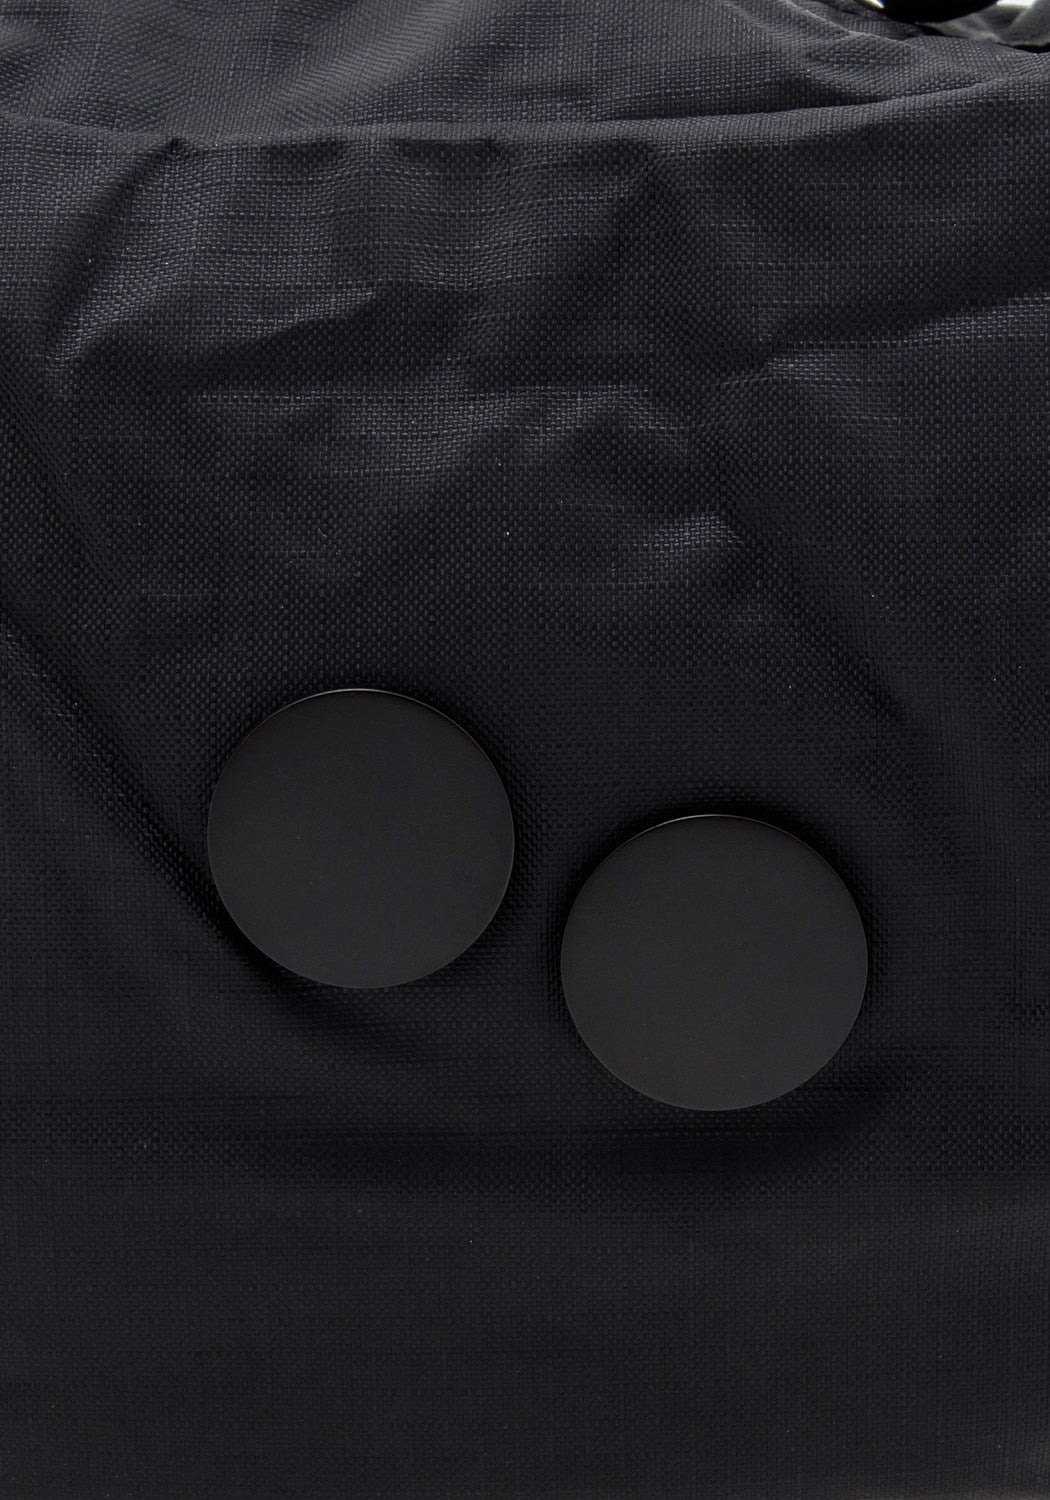 PPC-BAN-001-801G Krumm Small pure black | Bildmaterial bereitgestellt von SHOES.PLEASE.